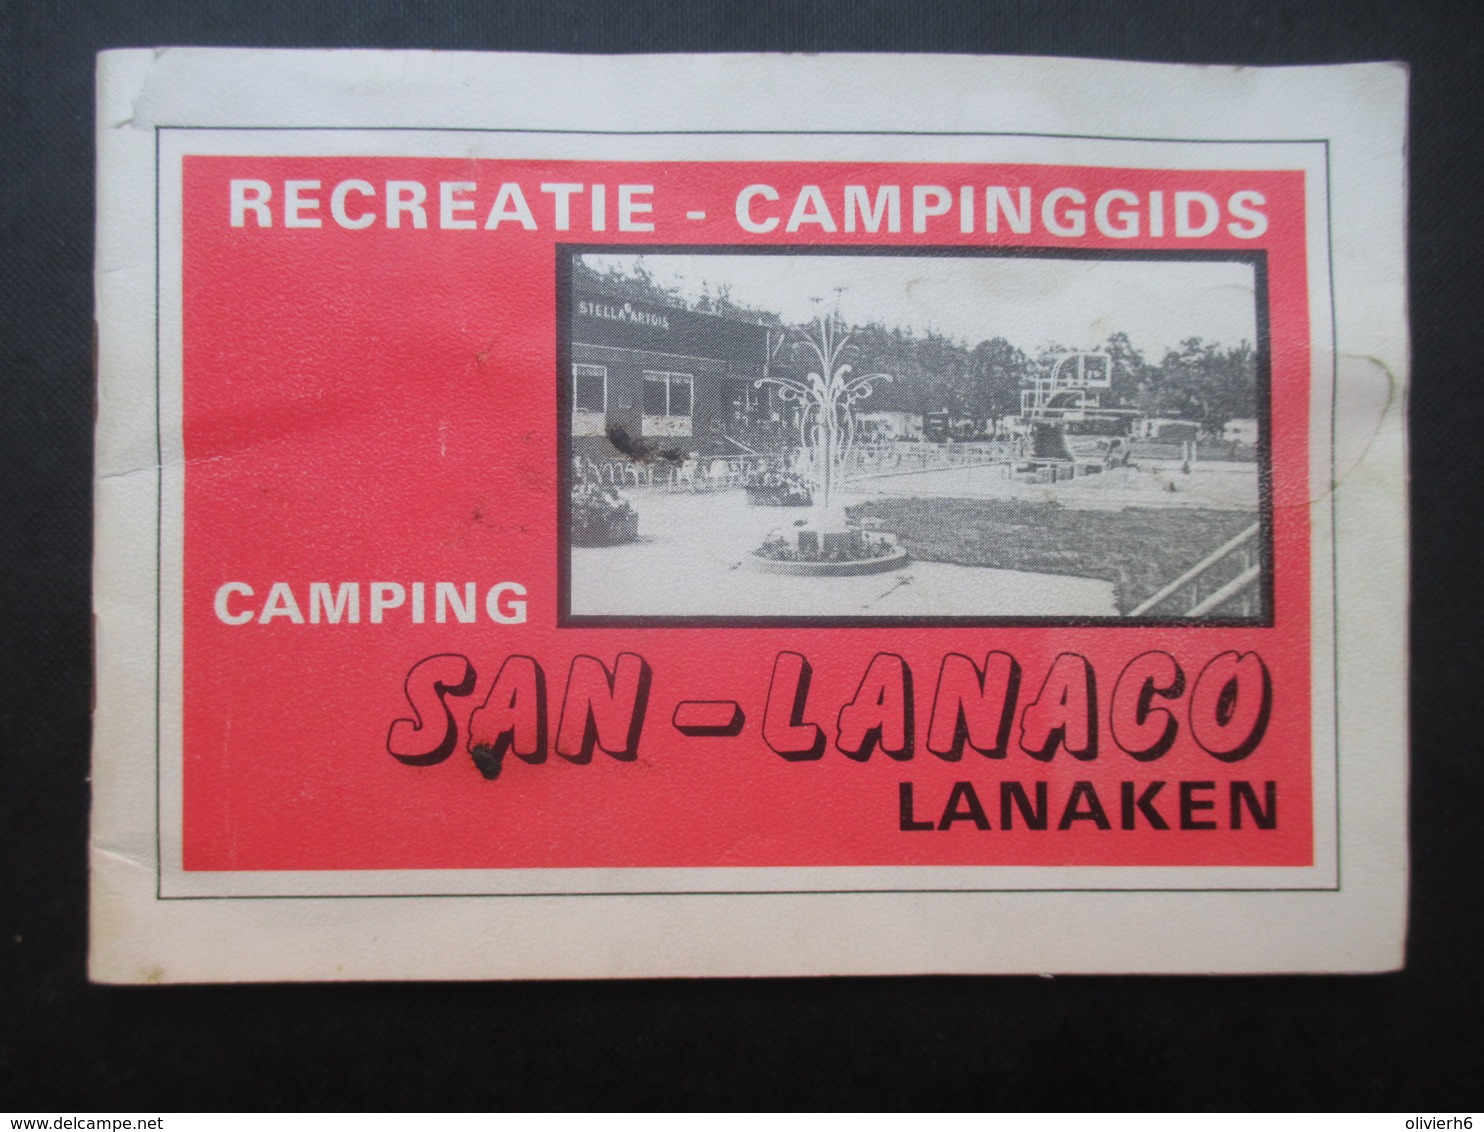 LIVRET PUBLICITAIRE BELGIQUE (V1910) LANAKEN (2 VUES) Camping SAN-LANACO Recreatie - Campinggids 1981 - Lanaken